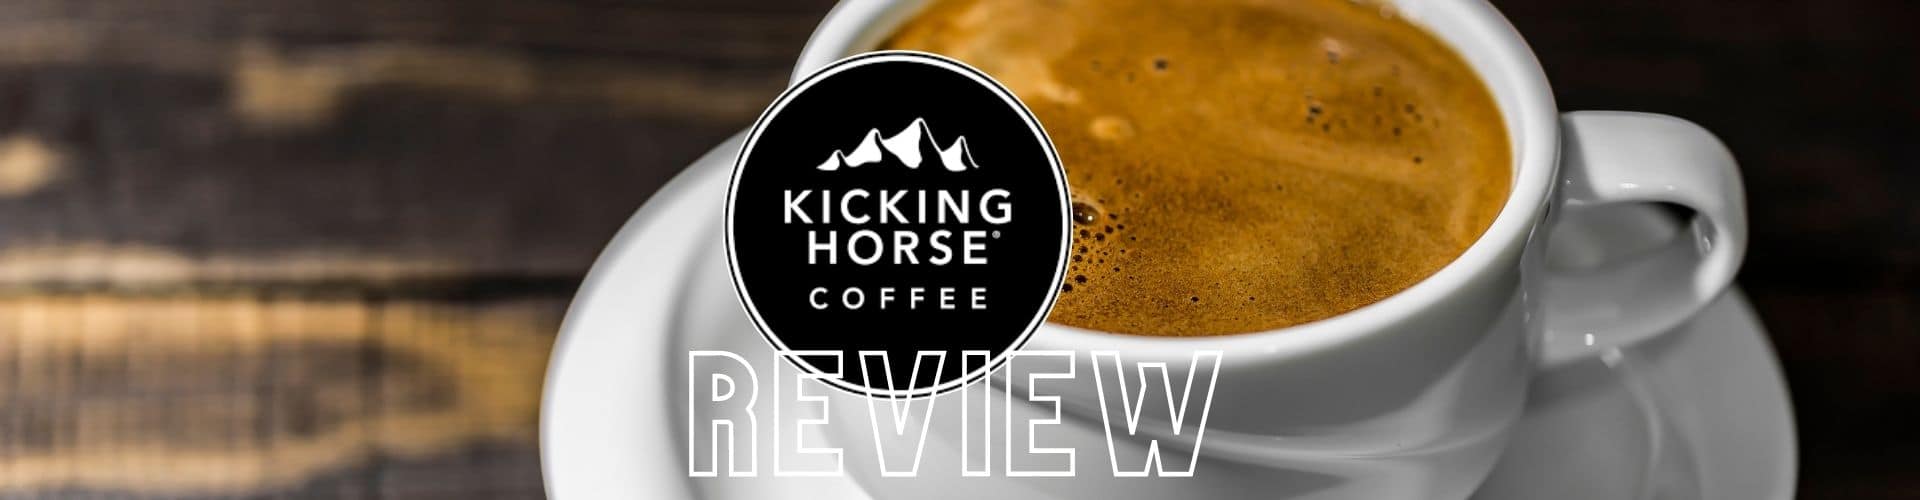 kicking horse review banner image